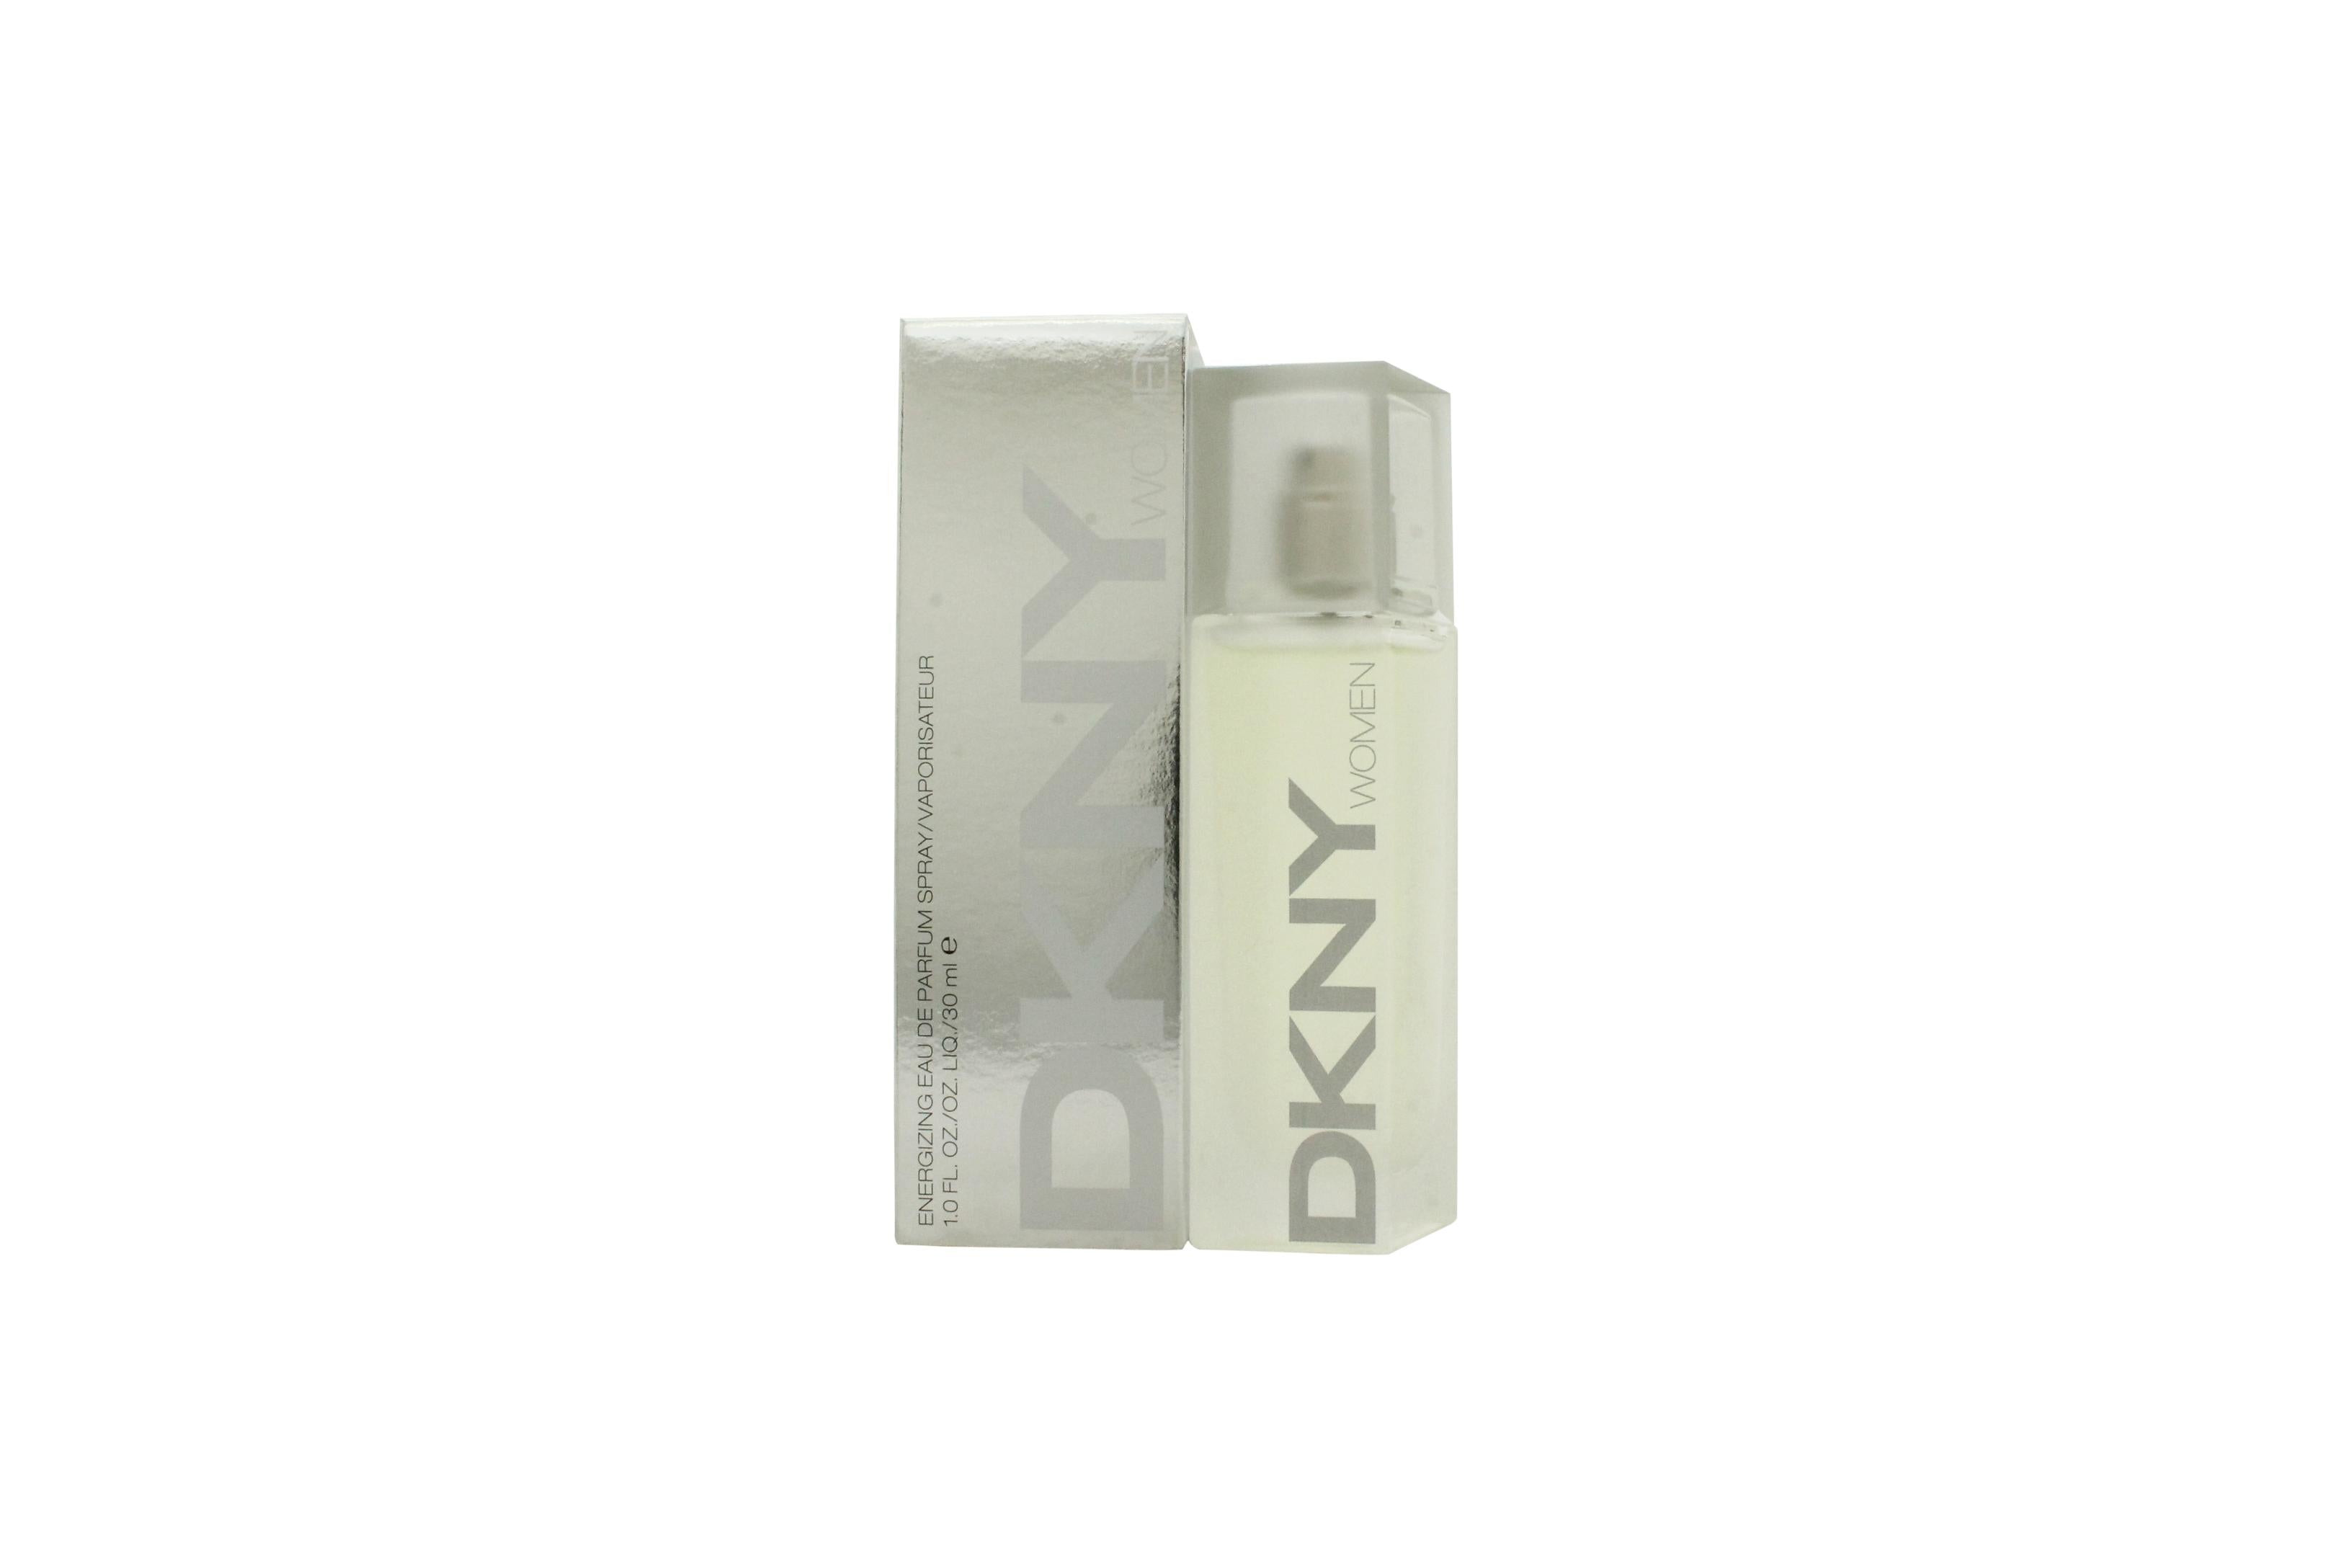 View DKNY Energizing Eau de Parfum 30ml Spray information